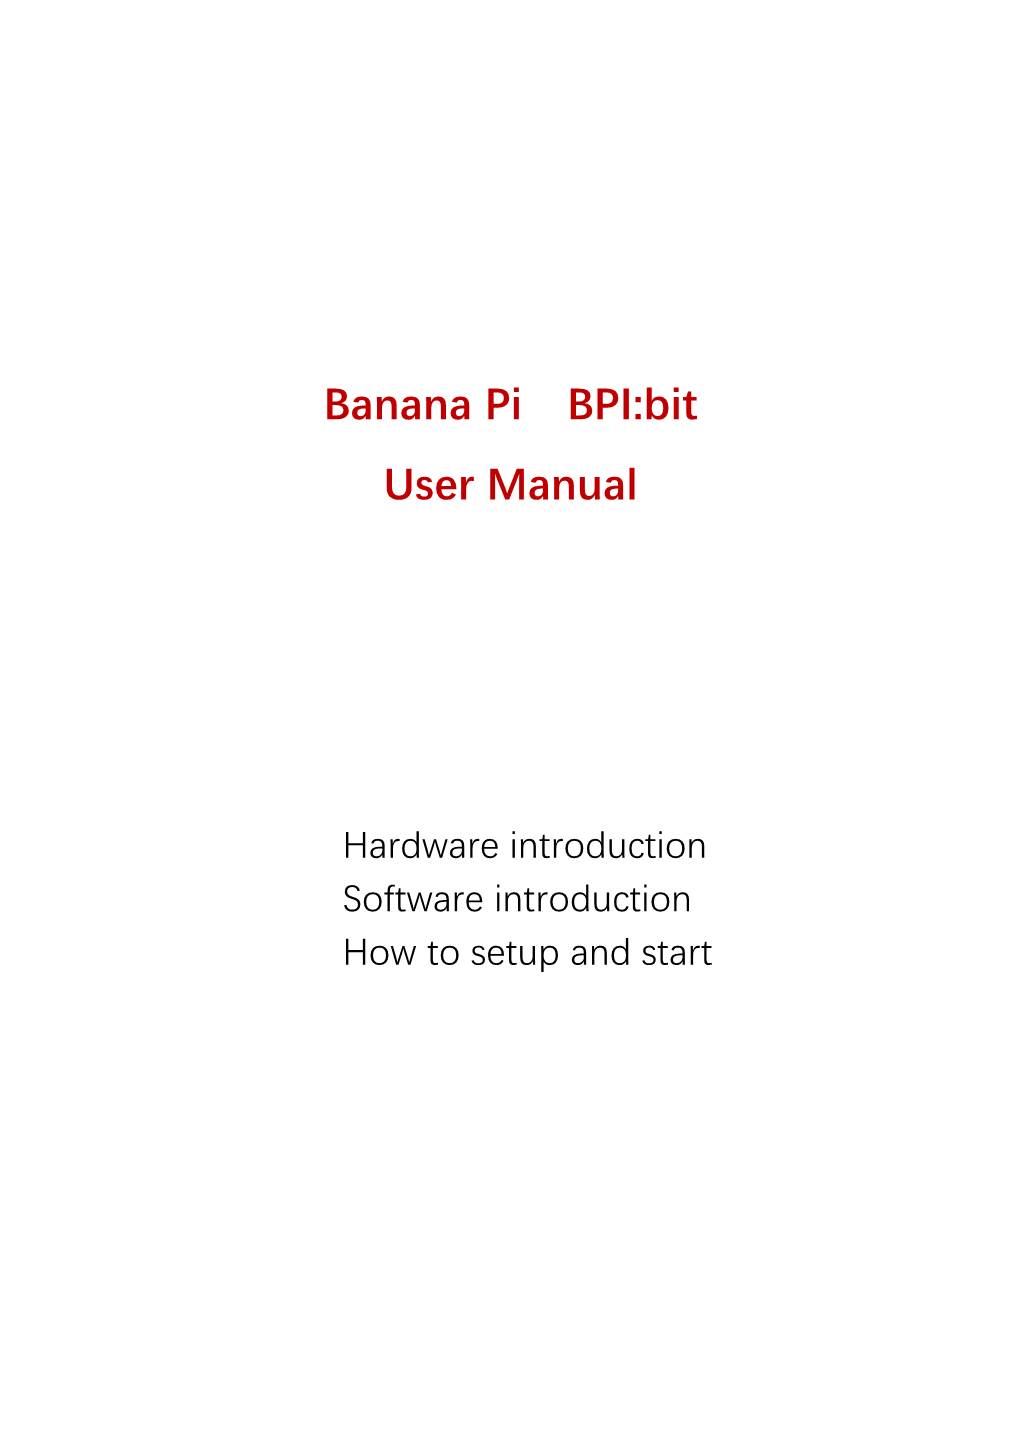 Banana Pi BPI:Bit User Manual